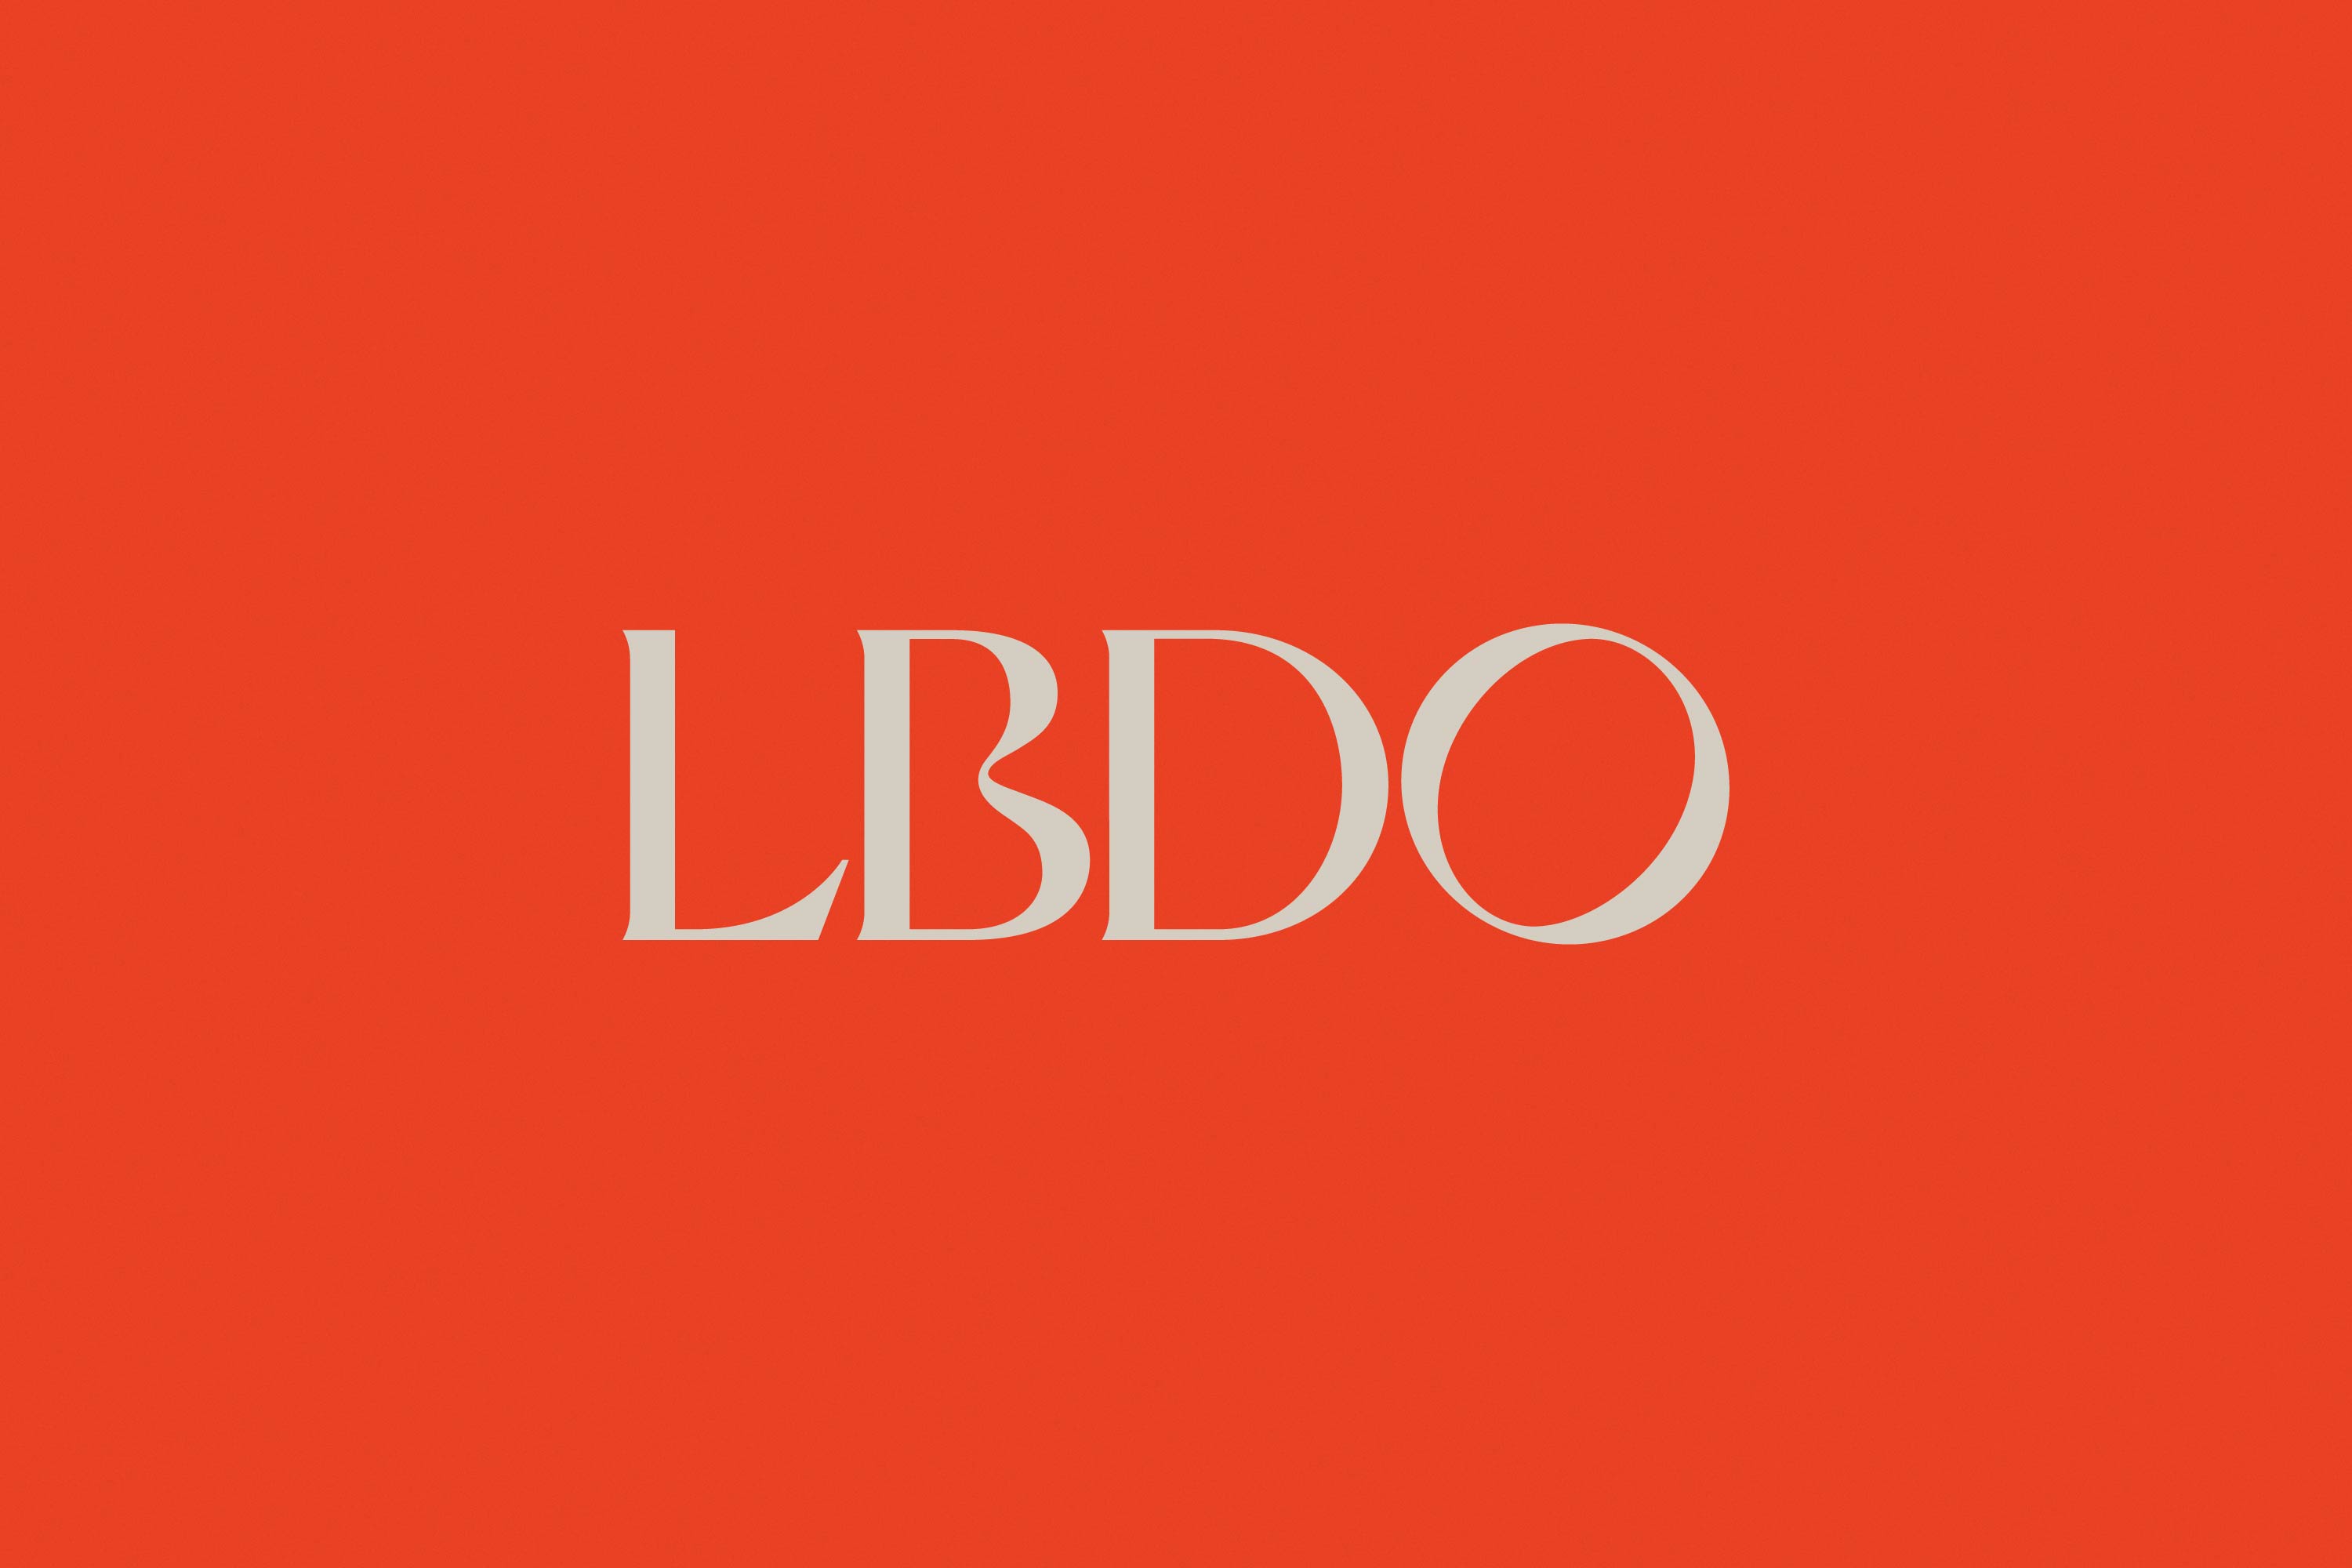 Serif logotype for sexual wellness brand LBDO designed by Universal Favourite